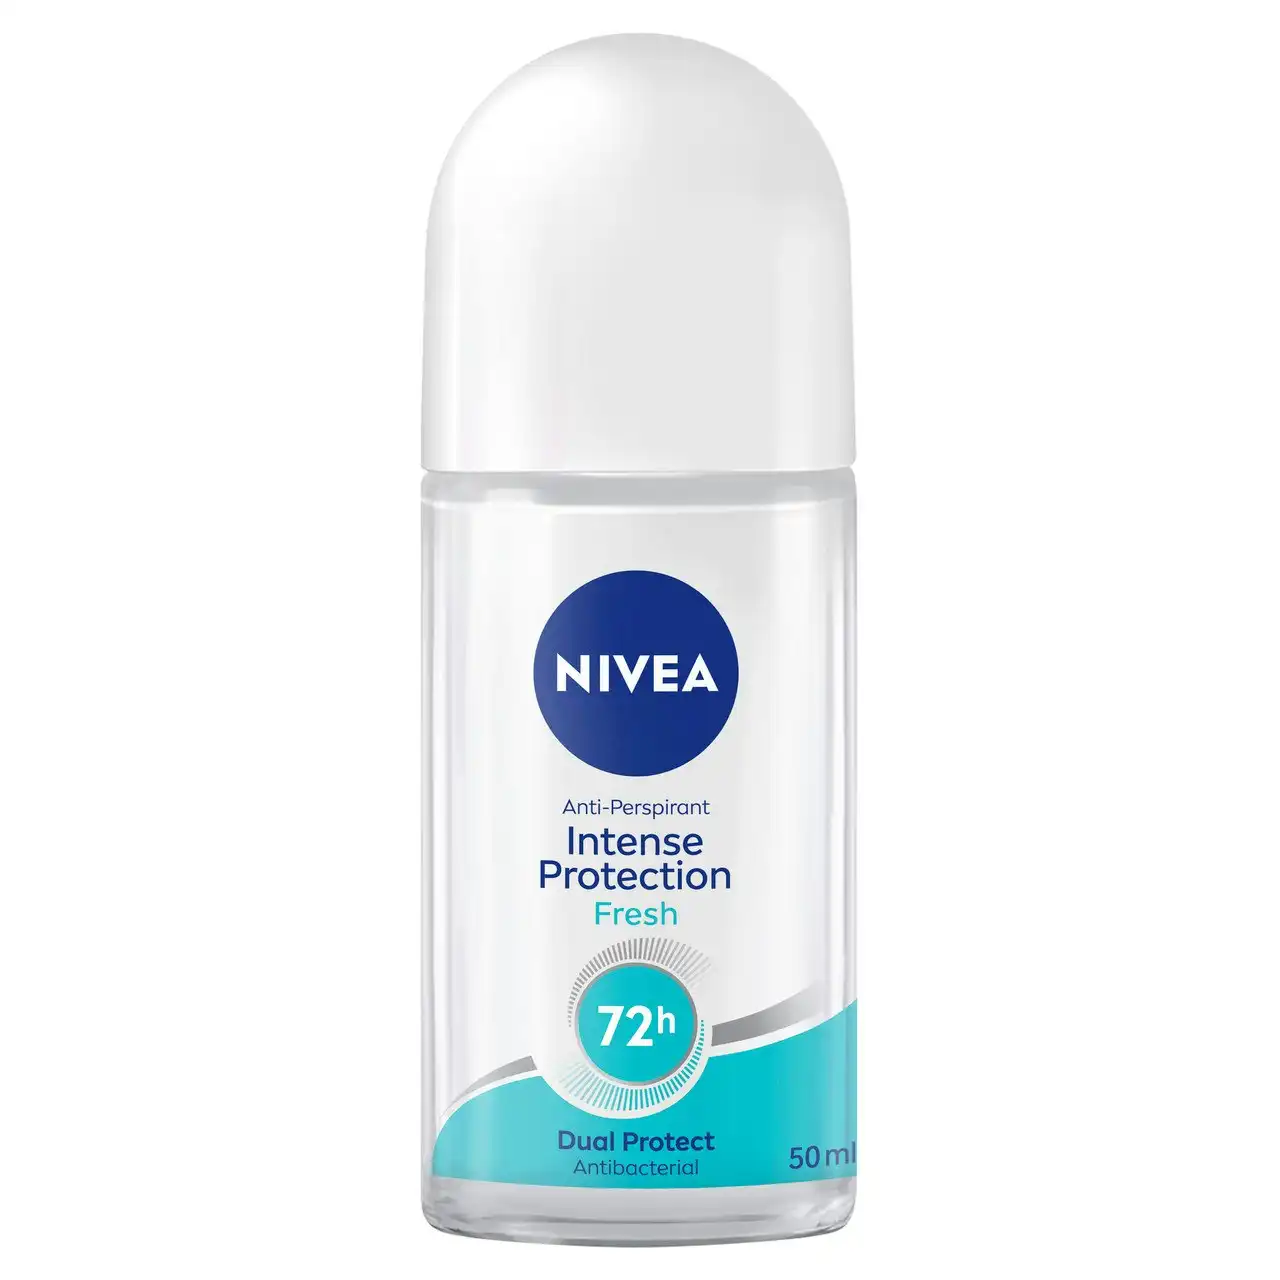 Nivea Intense Protection Fresh Anti-perspirant Roll-On Deodorant